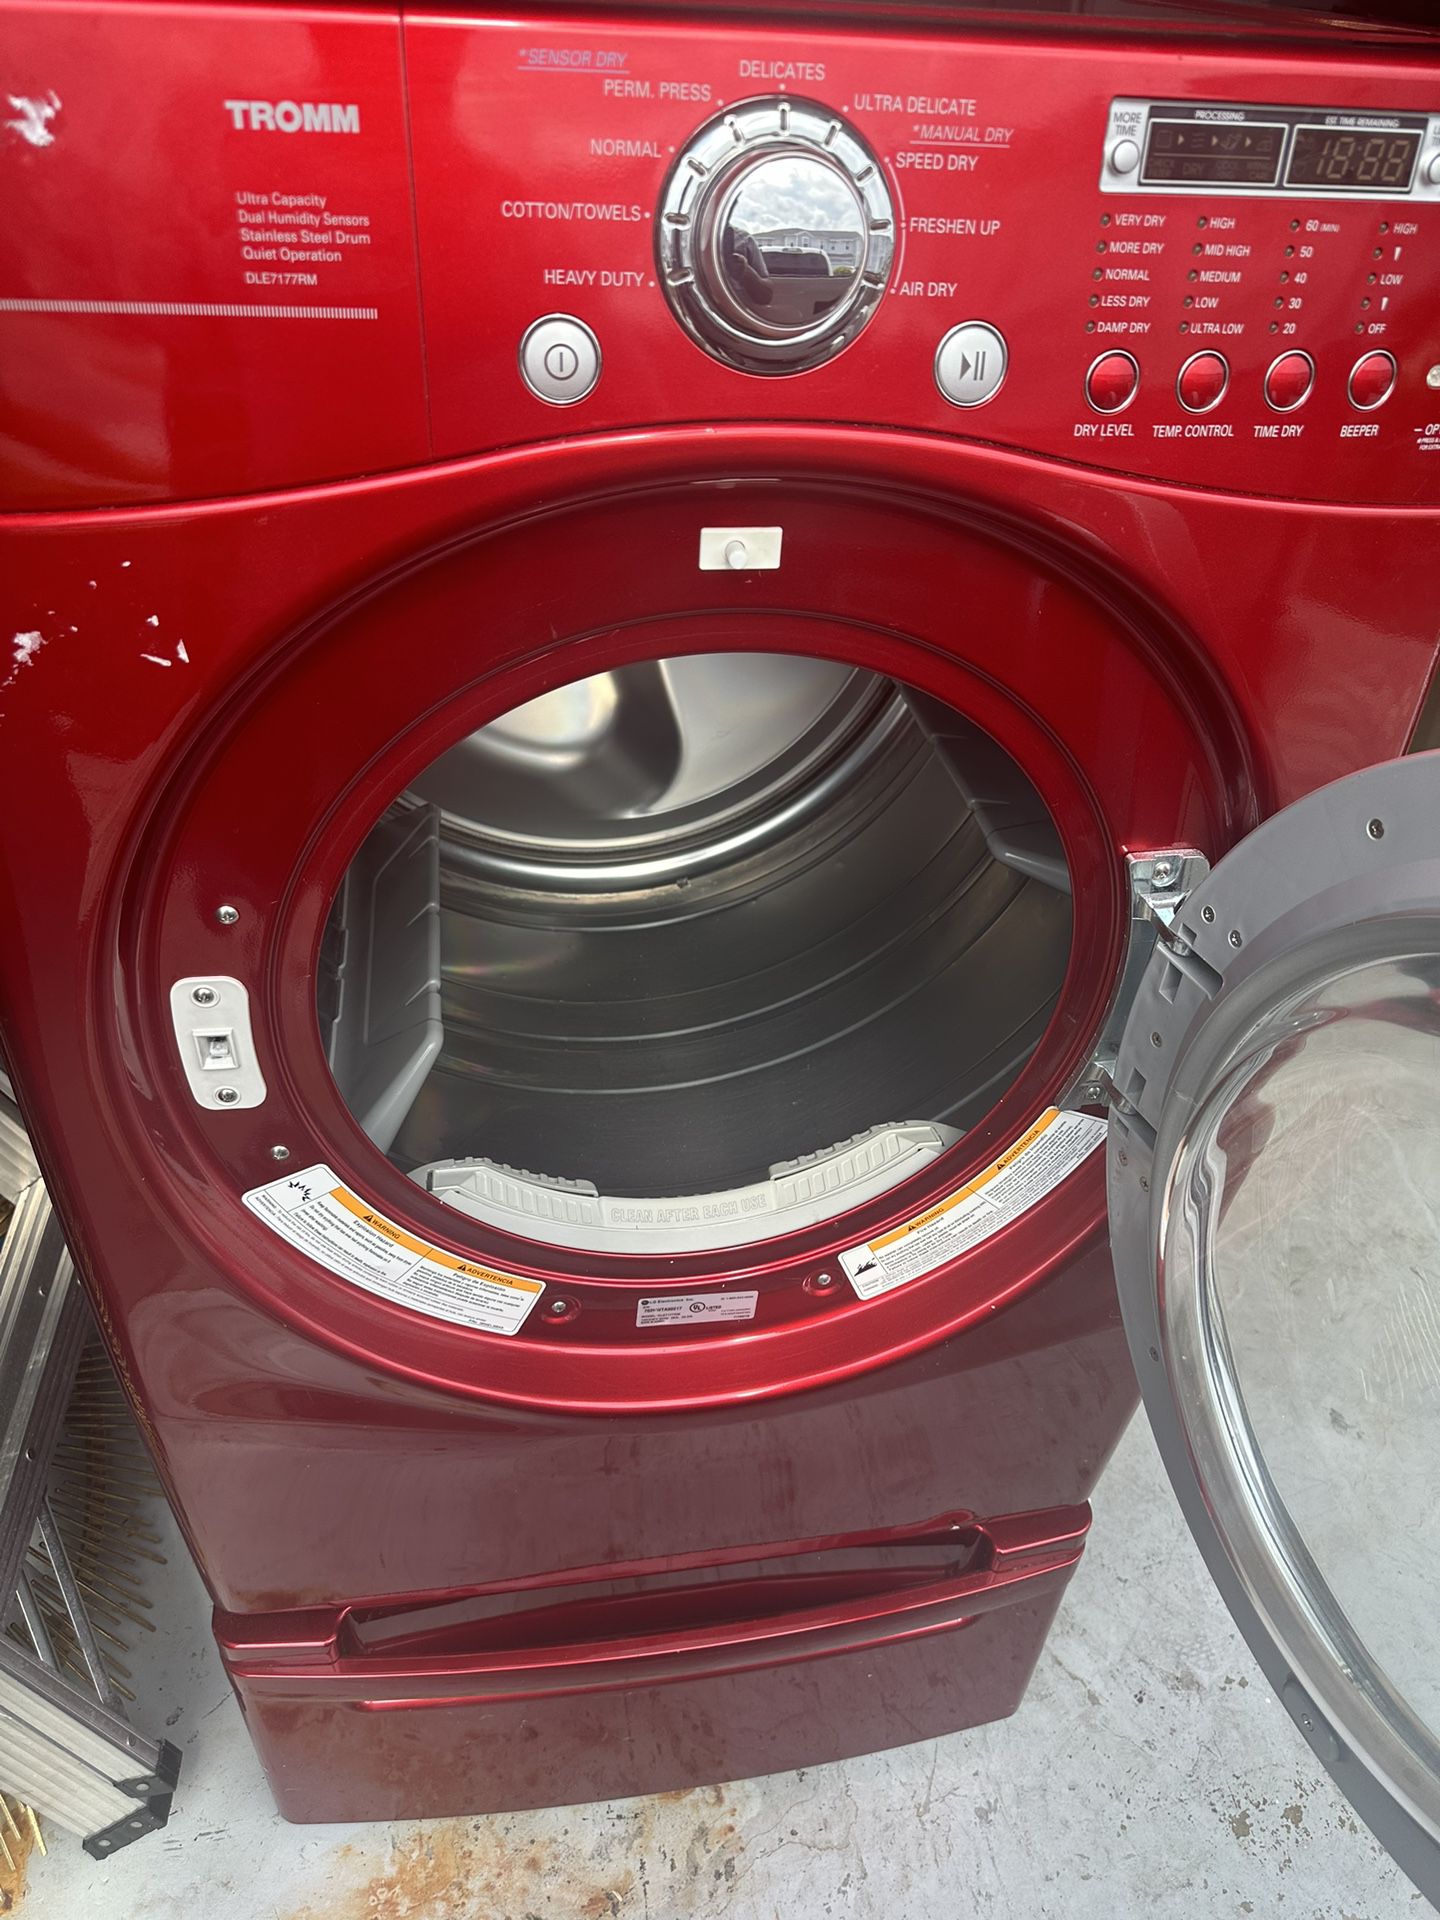 LG Dryer With Pedestal 